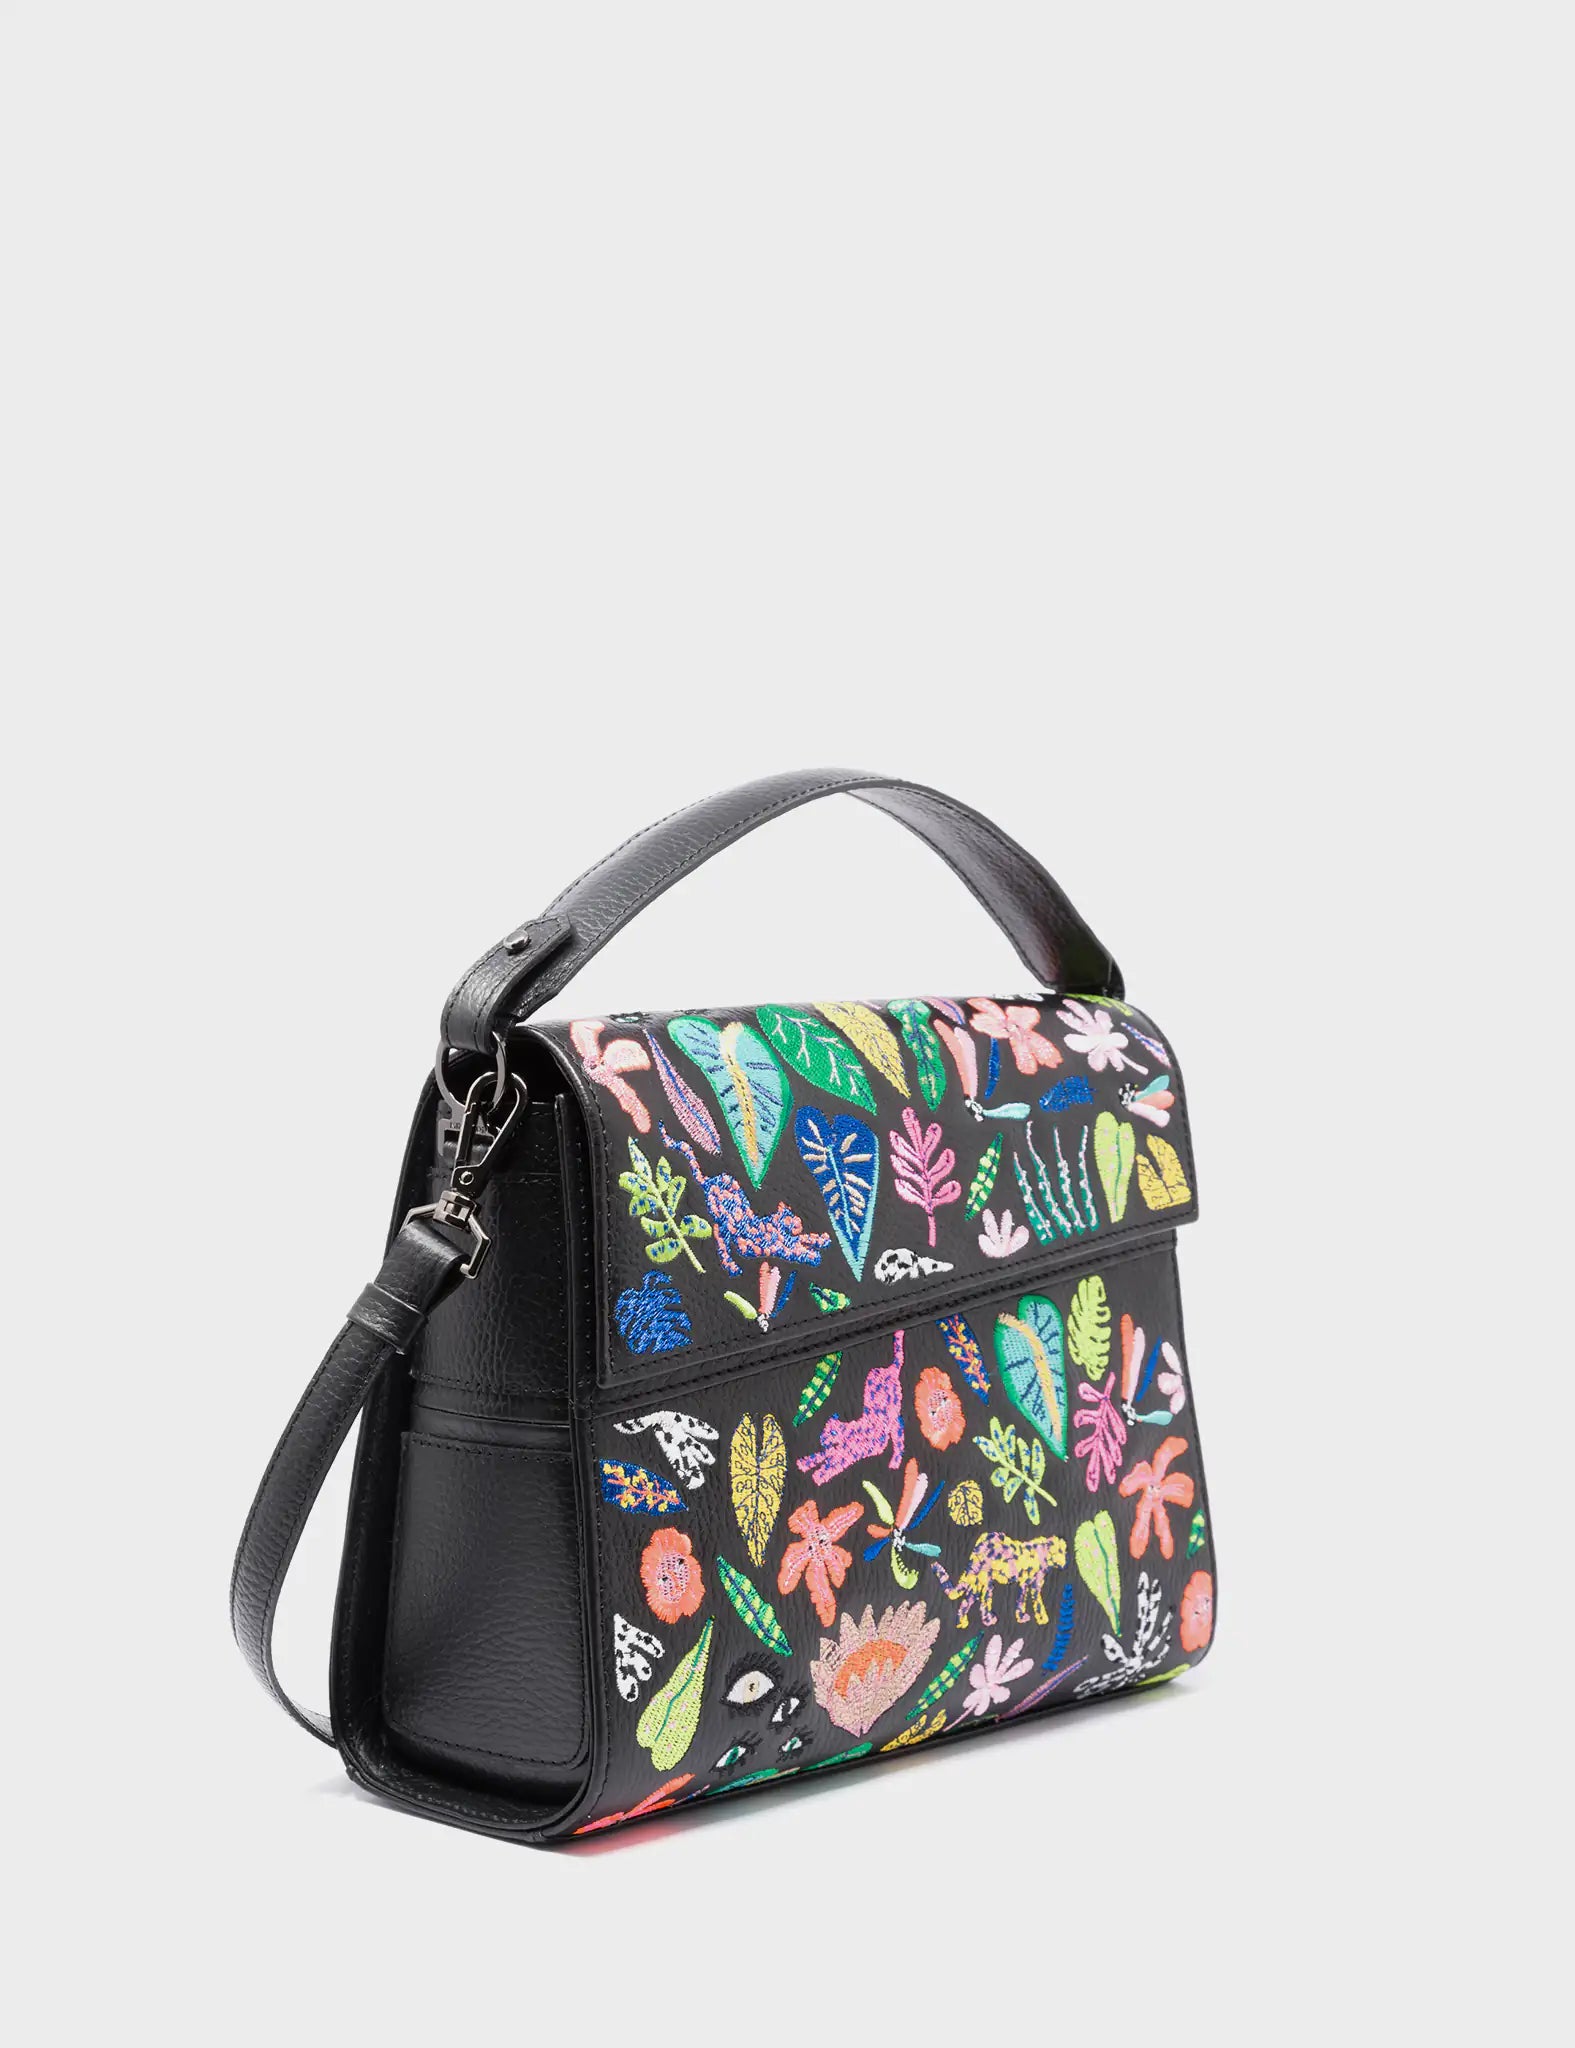 Anastasio Medium Crossbody Handbag Back Leather - El Trópico Print and Embroidery Design